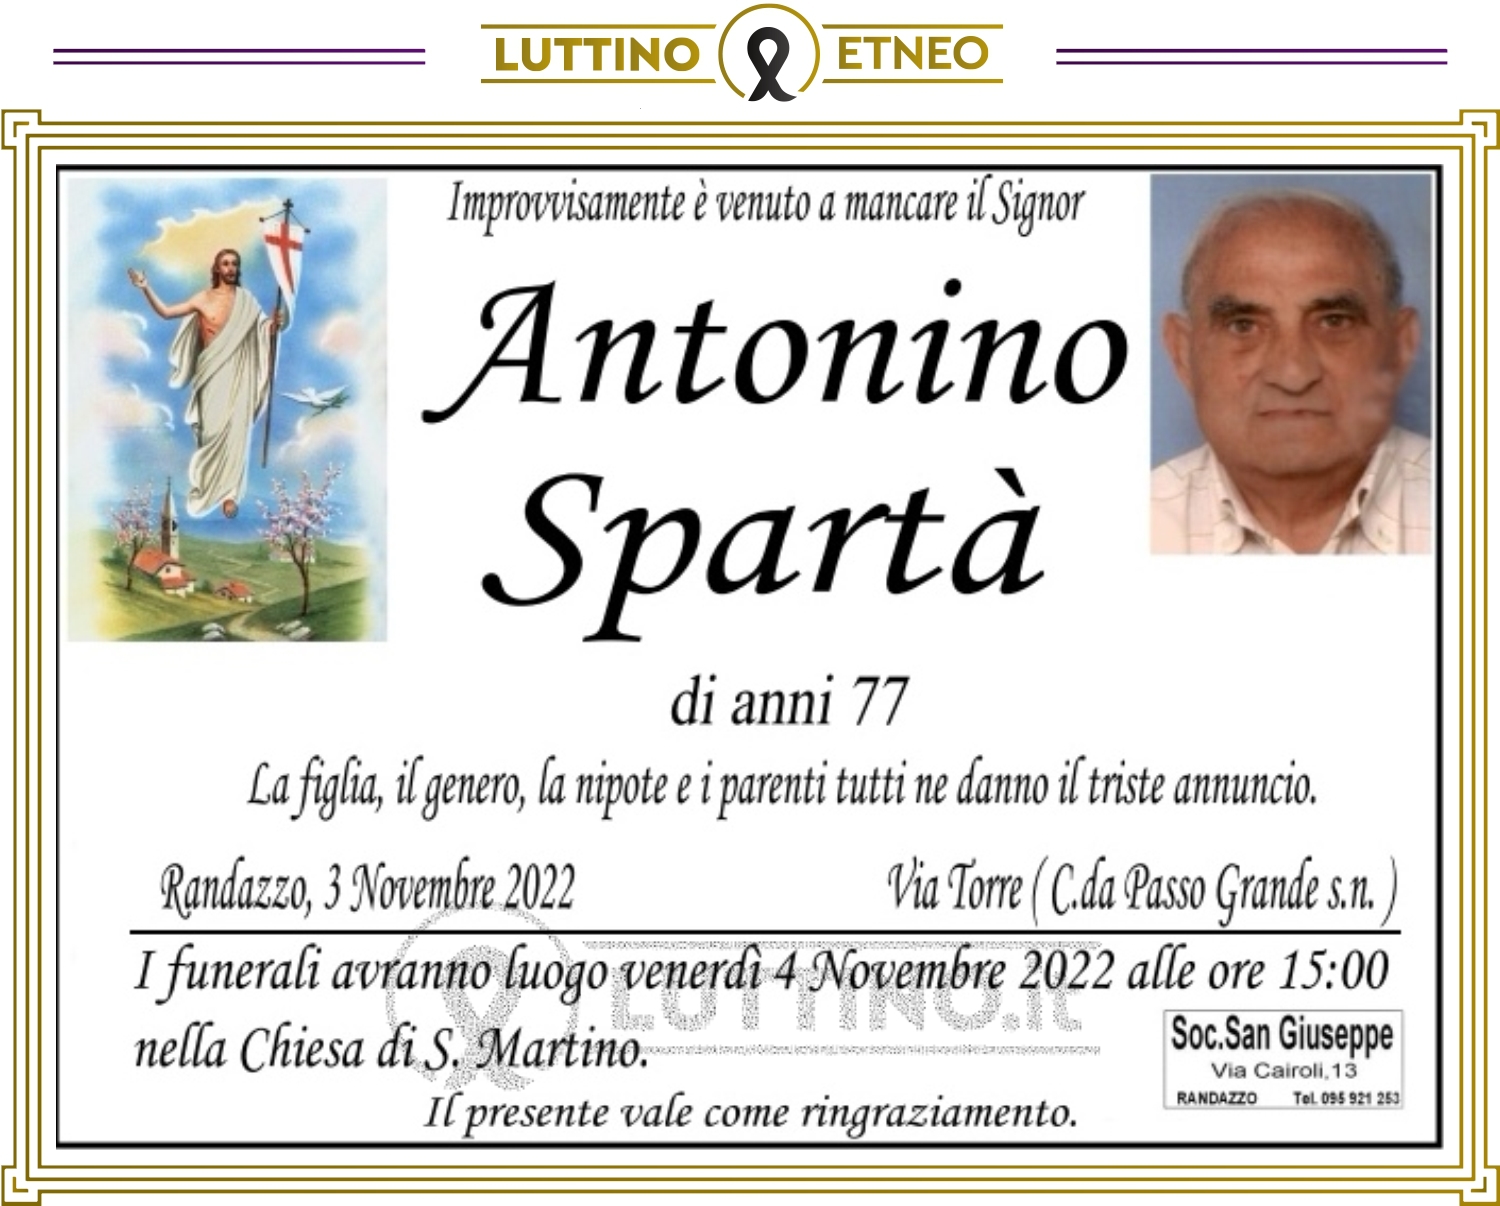 Antonino Spartà